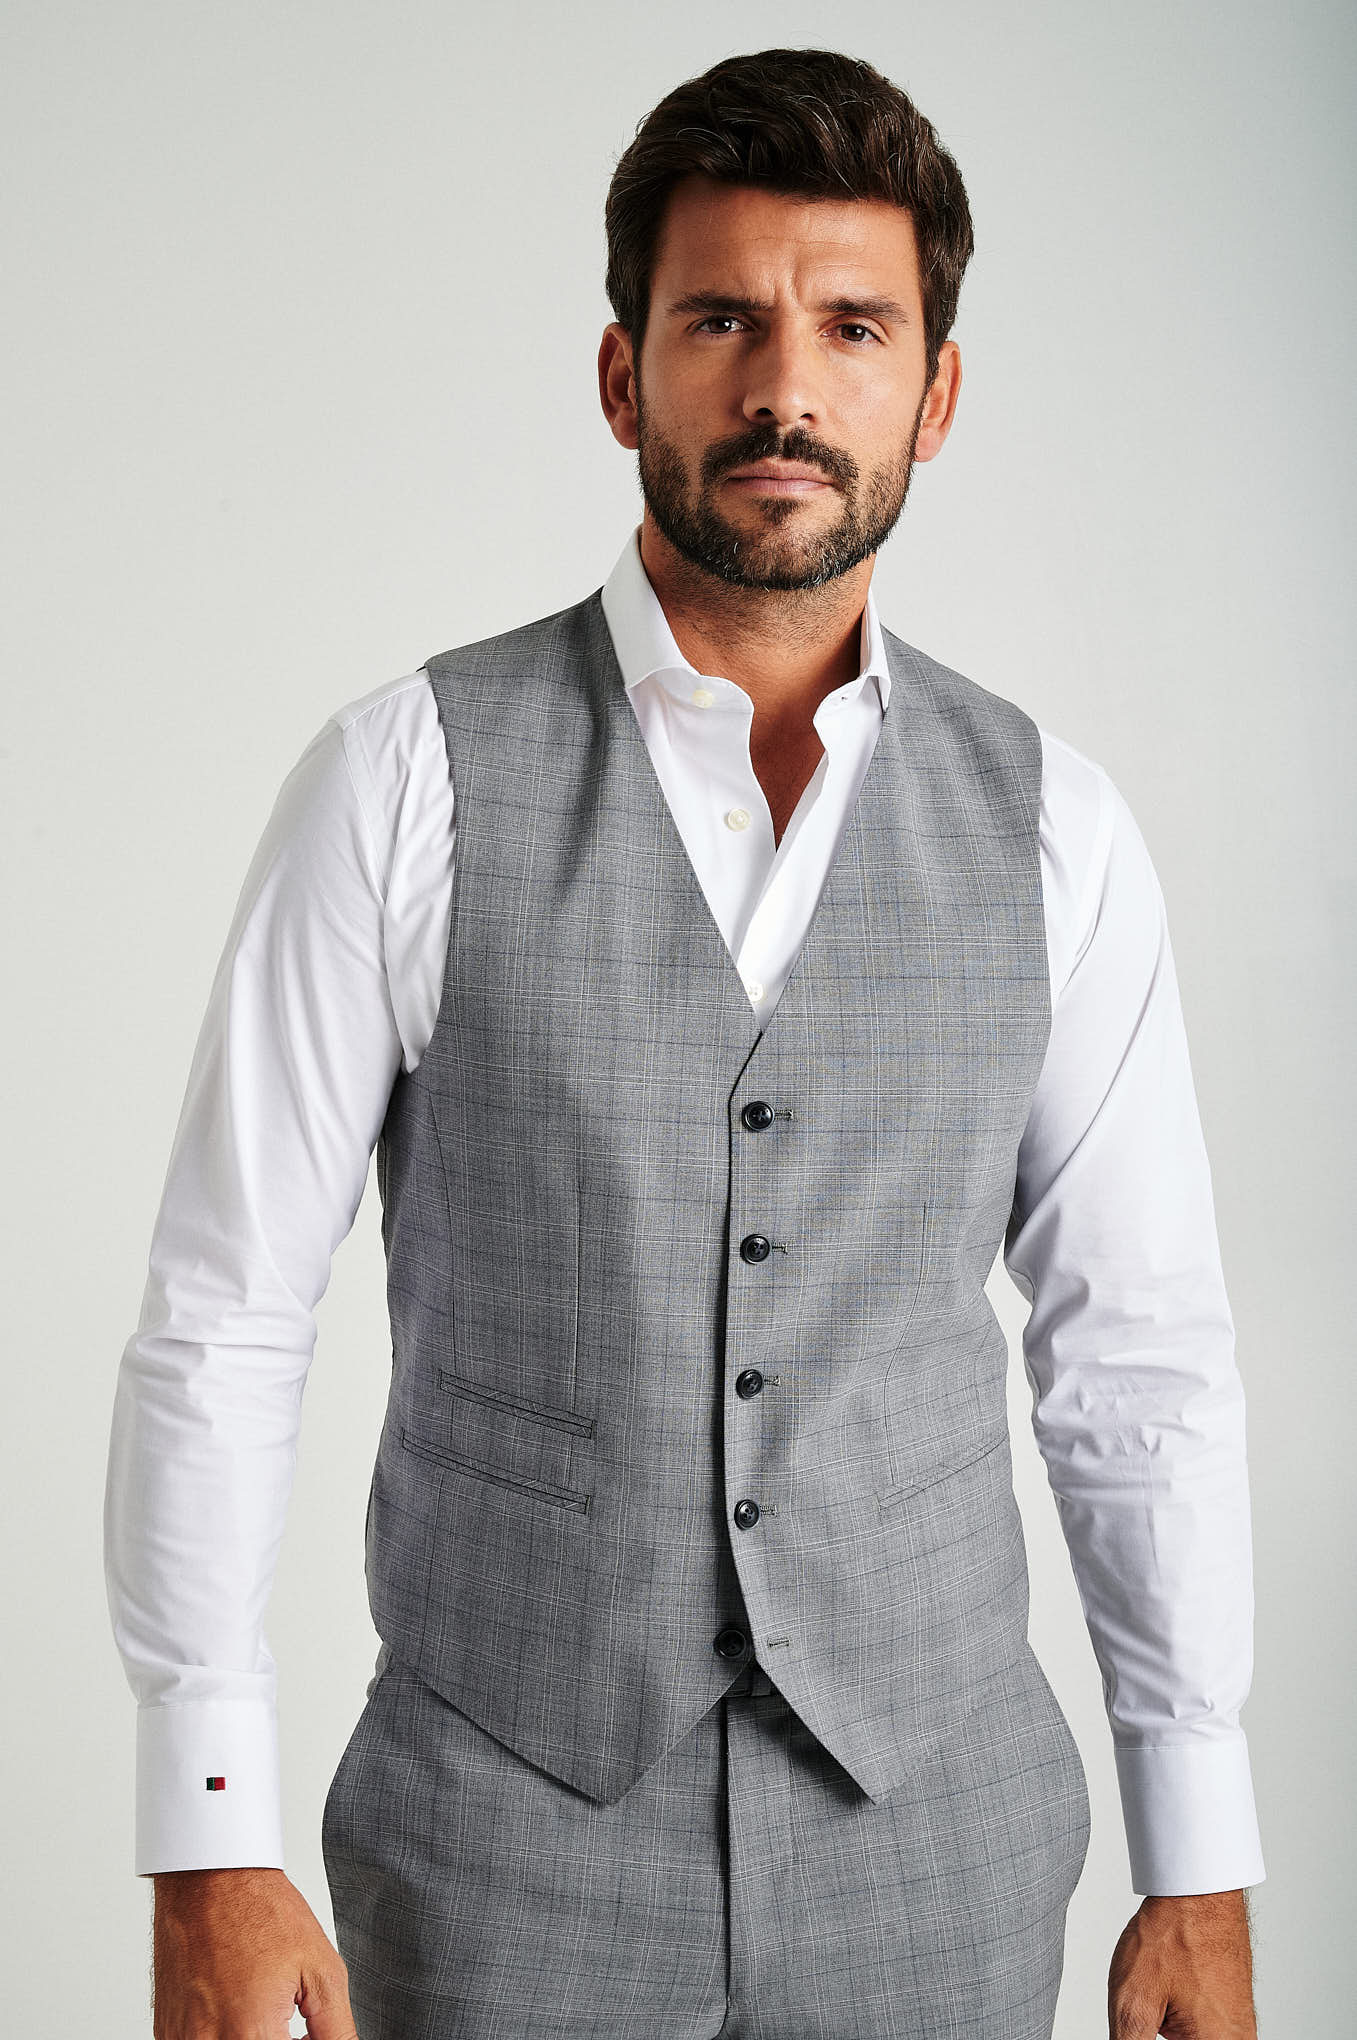 Suit Vest Light Grey Formal Man